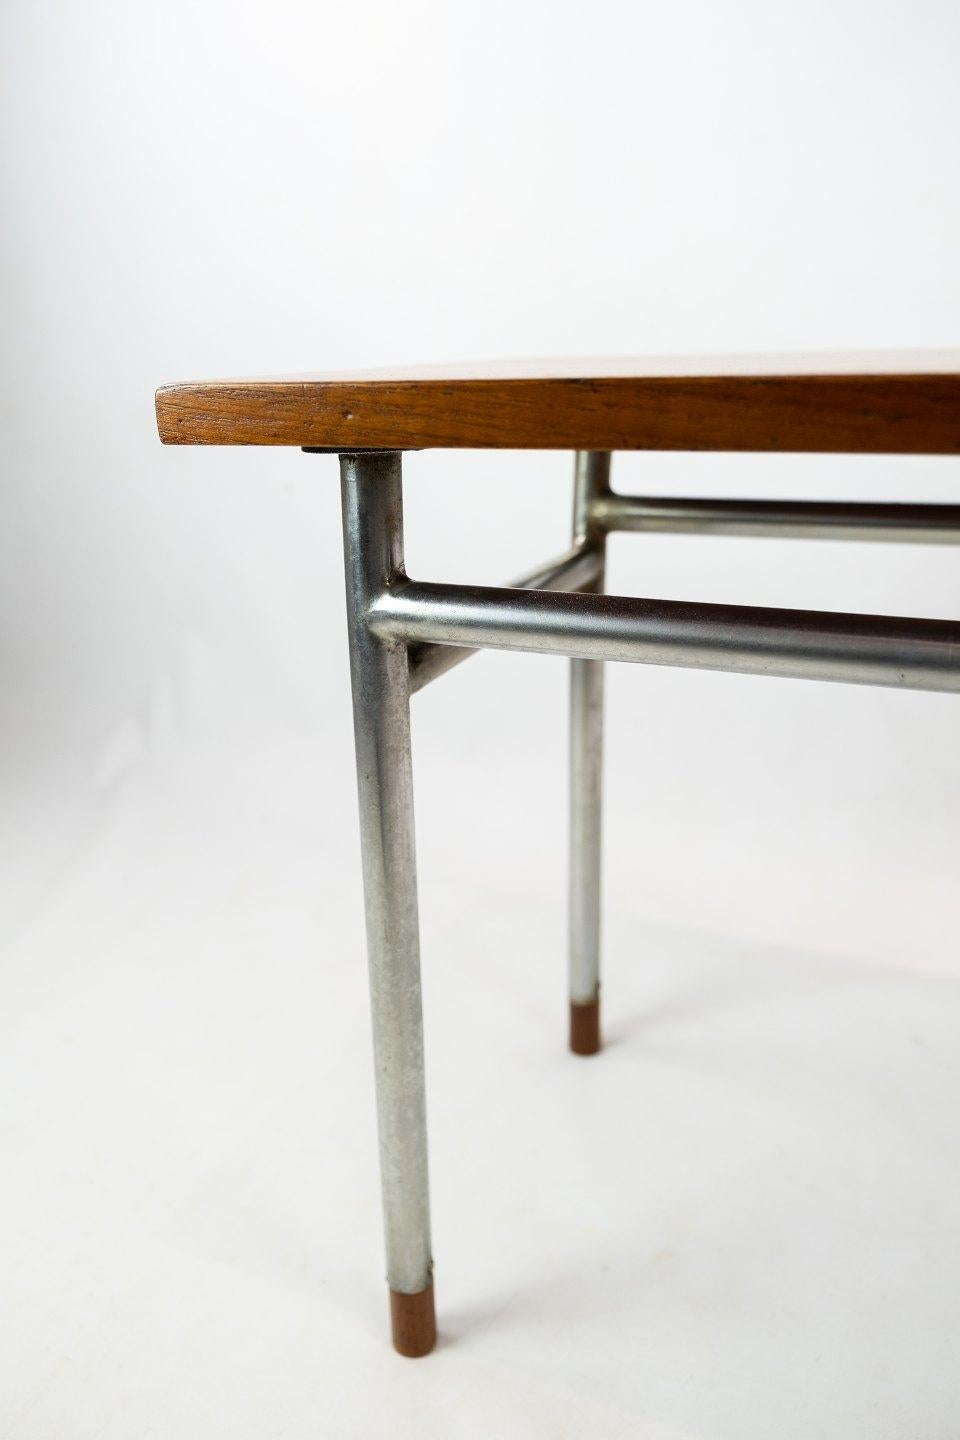 Danish Coffee Table in Teak and Legs in Metal, Designed by Hans J. Wegner, 1960s For Sale